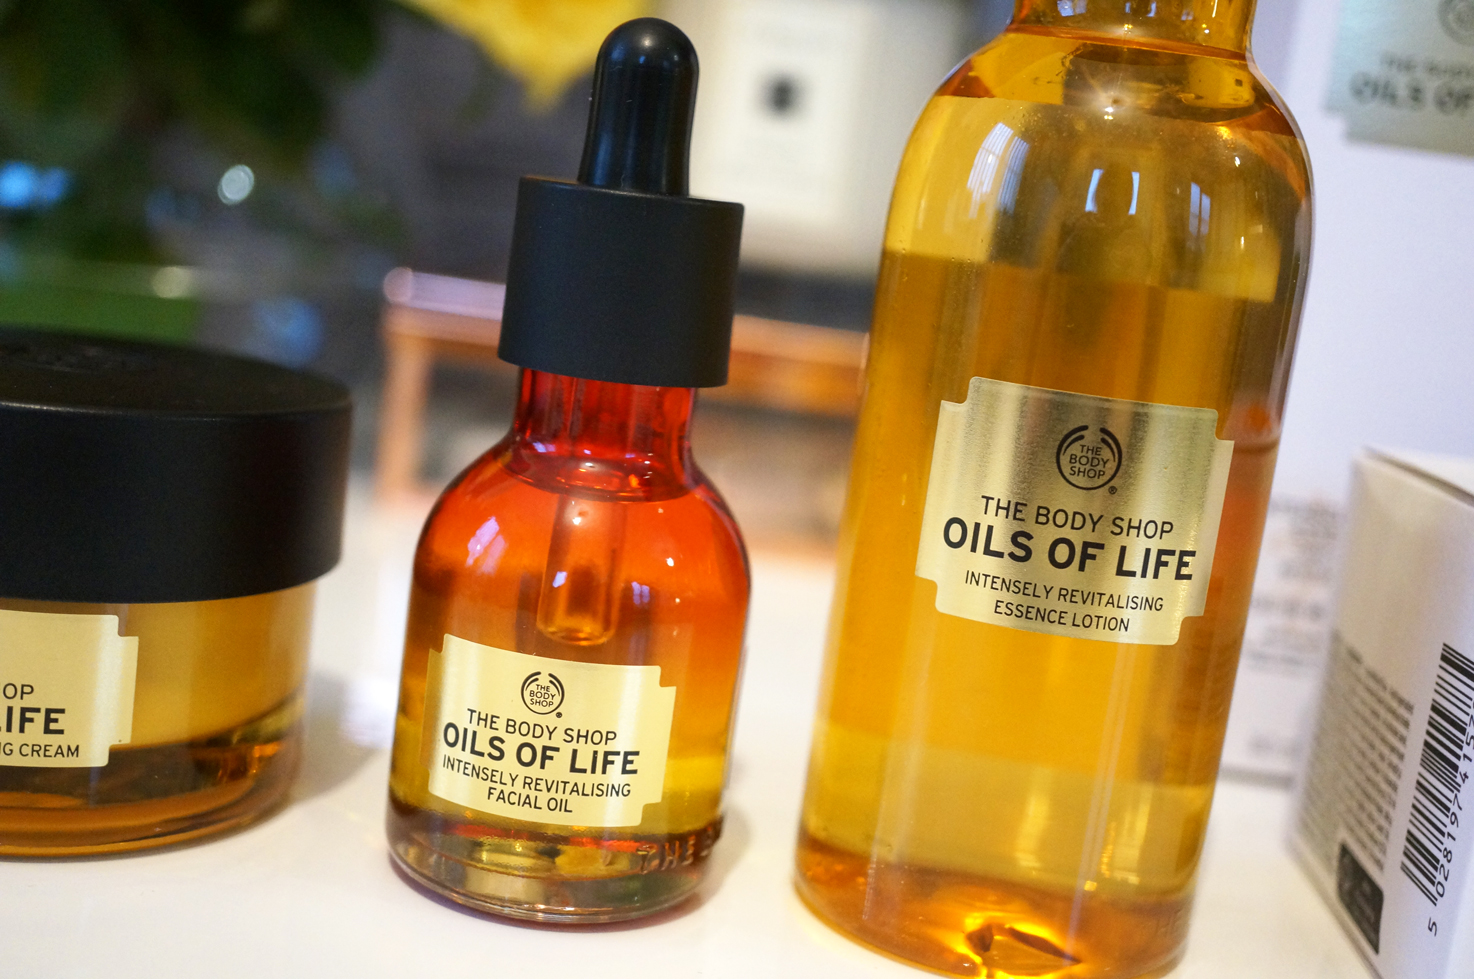 body shop oils of life facial oil review